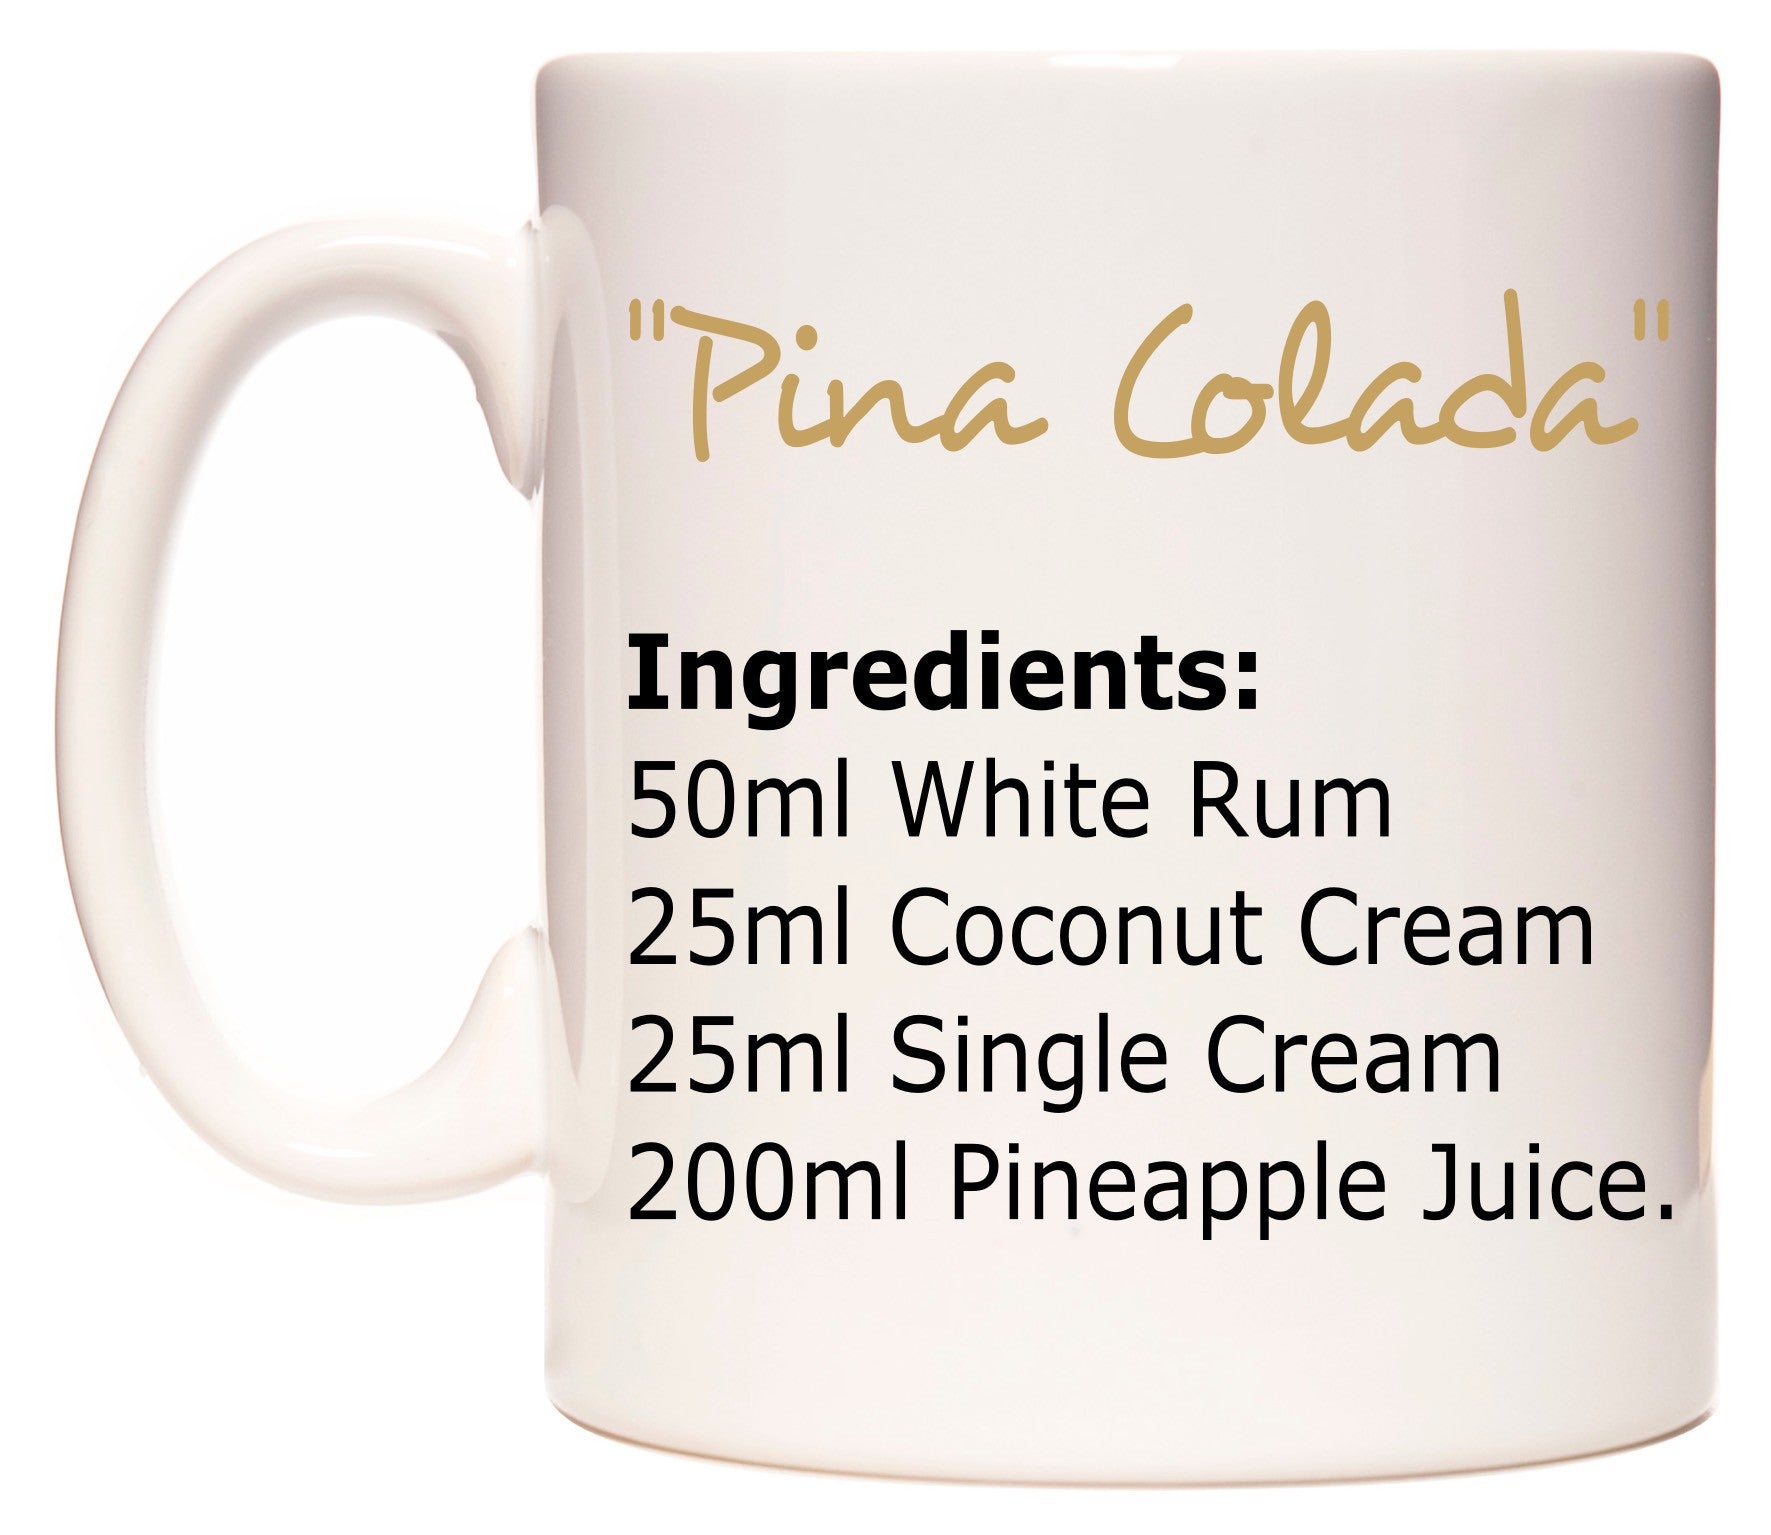 This mug features Pina Colada Ingredients